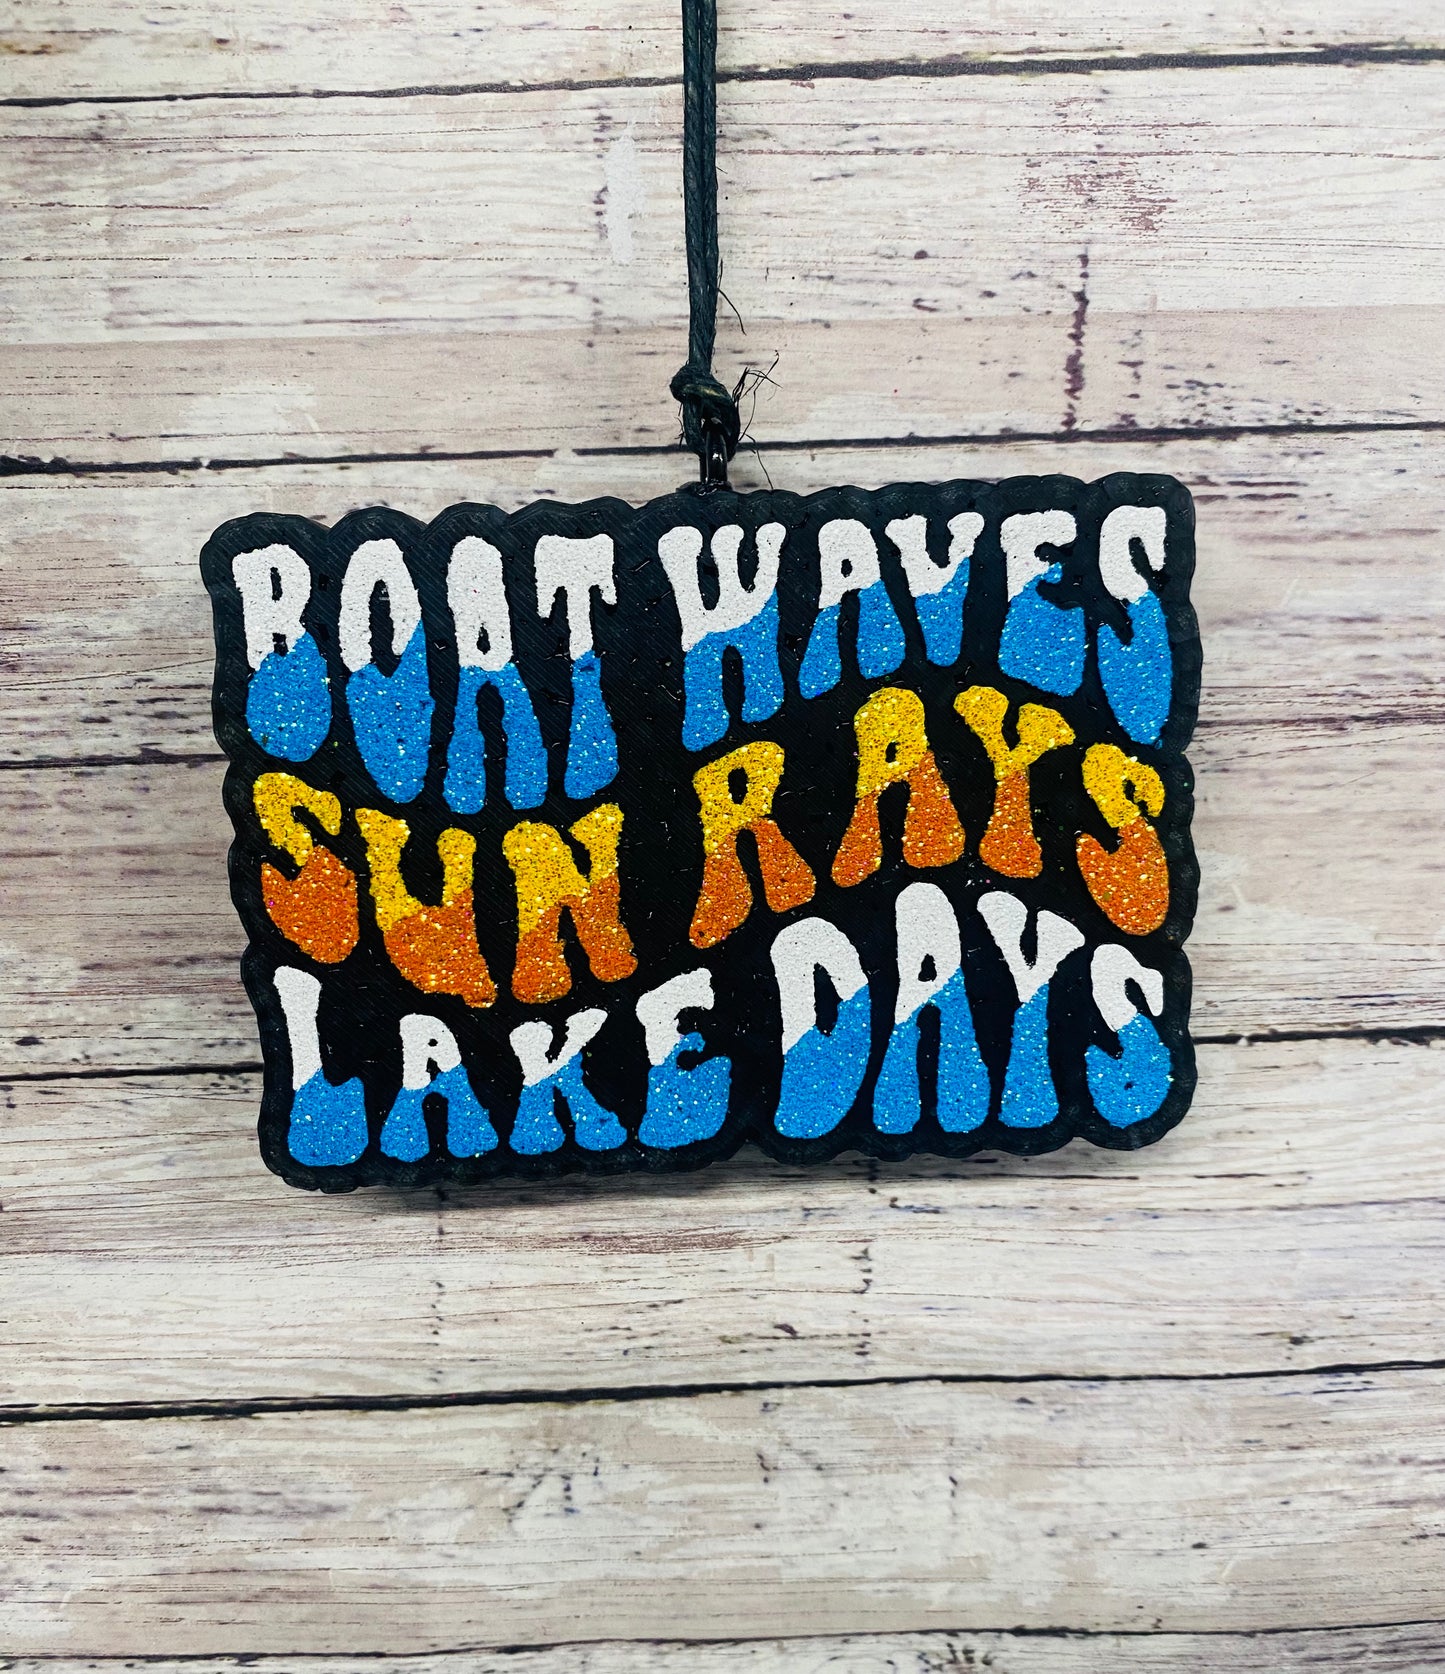 Boat waves Lake Days